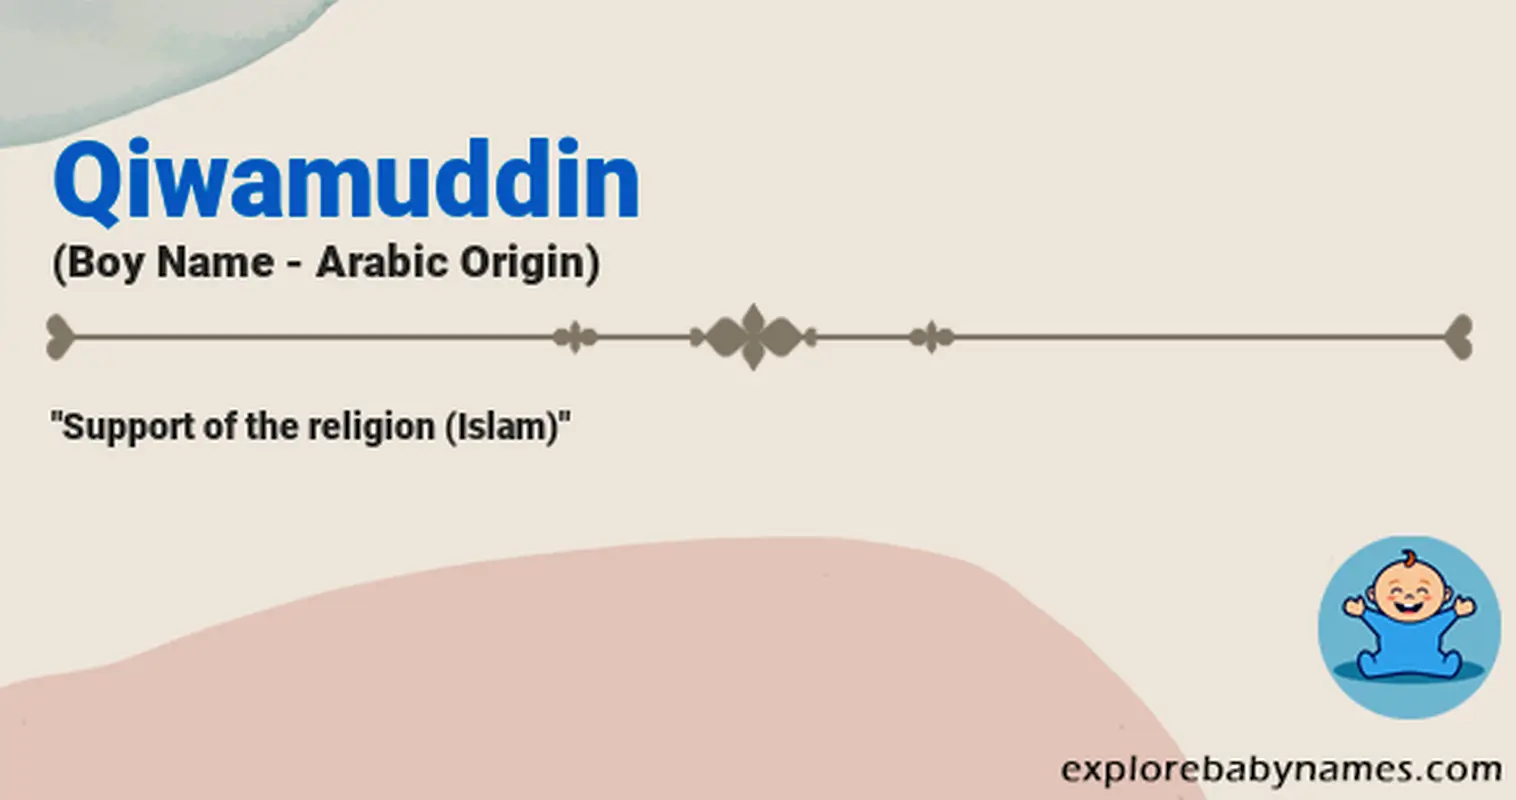 Meaning of Qiwamuddin